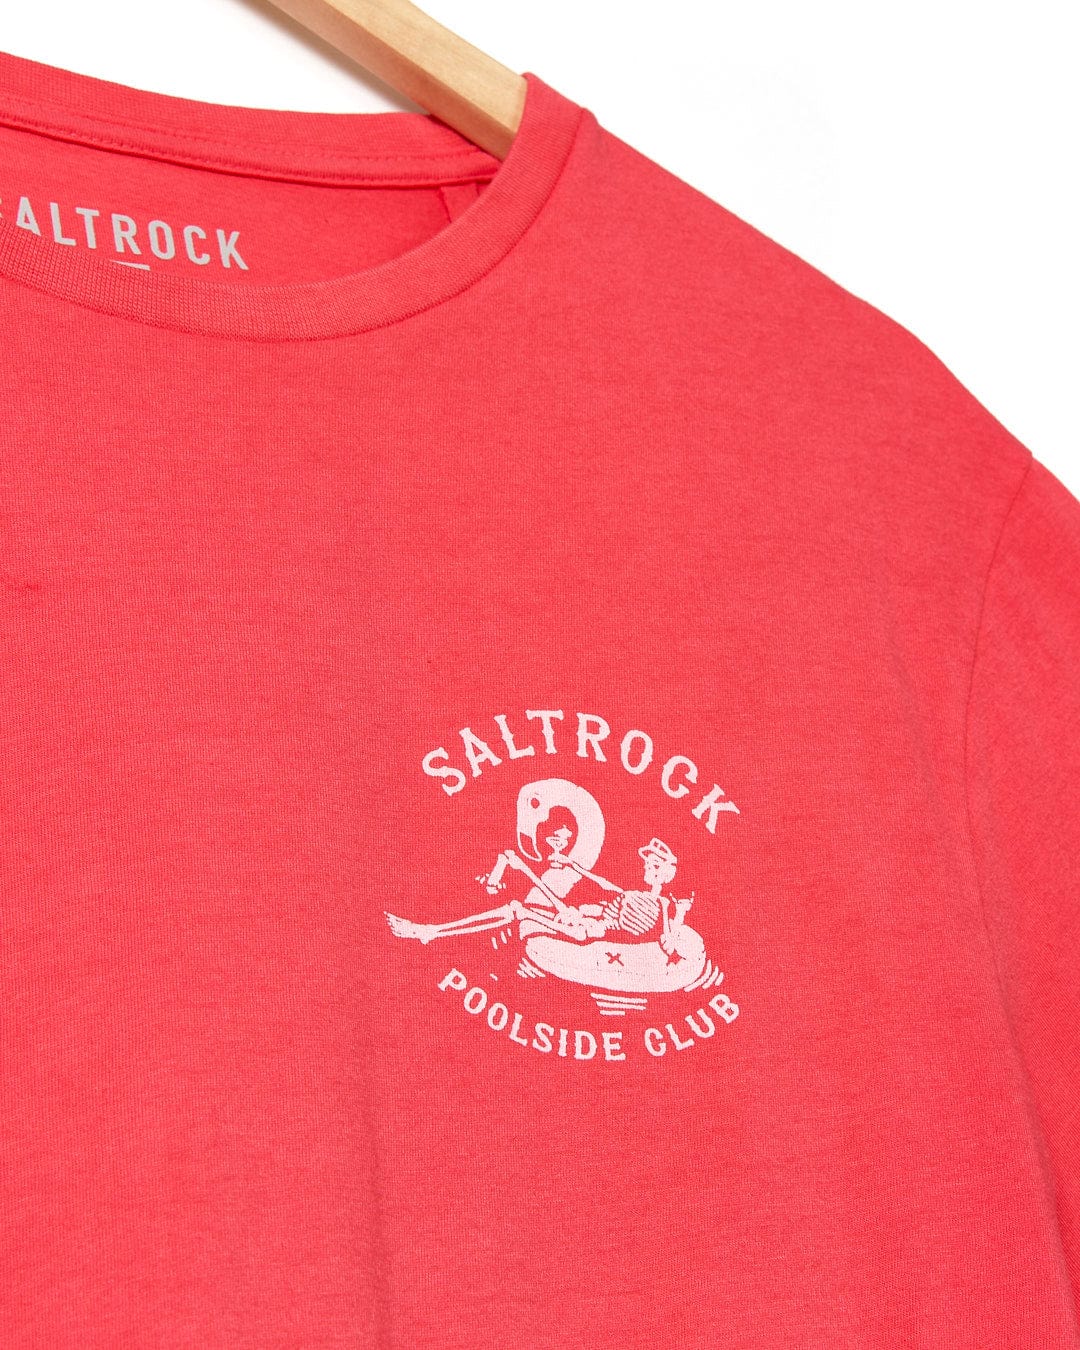 A pink Poolside - Mens Dip Die Short Sleeve T-Shirt that says Saltrock polo club.